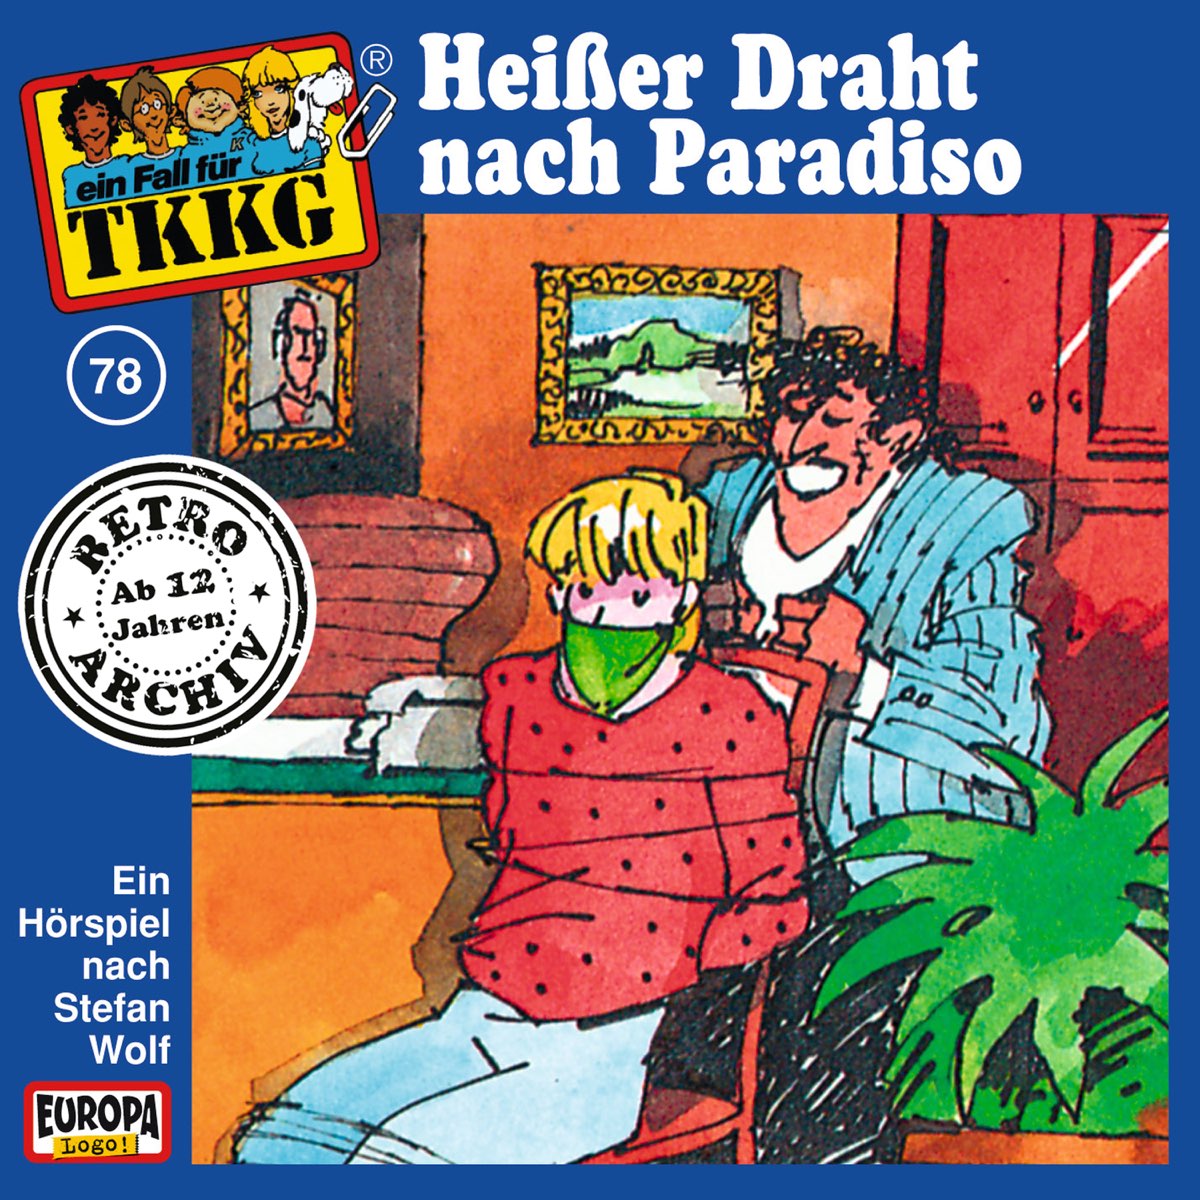 TKKG Retro-Archiv adlı sanatçının Folge 78: Heißer Draht nach Paradiso  albümü Apple Music'te